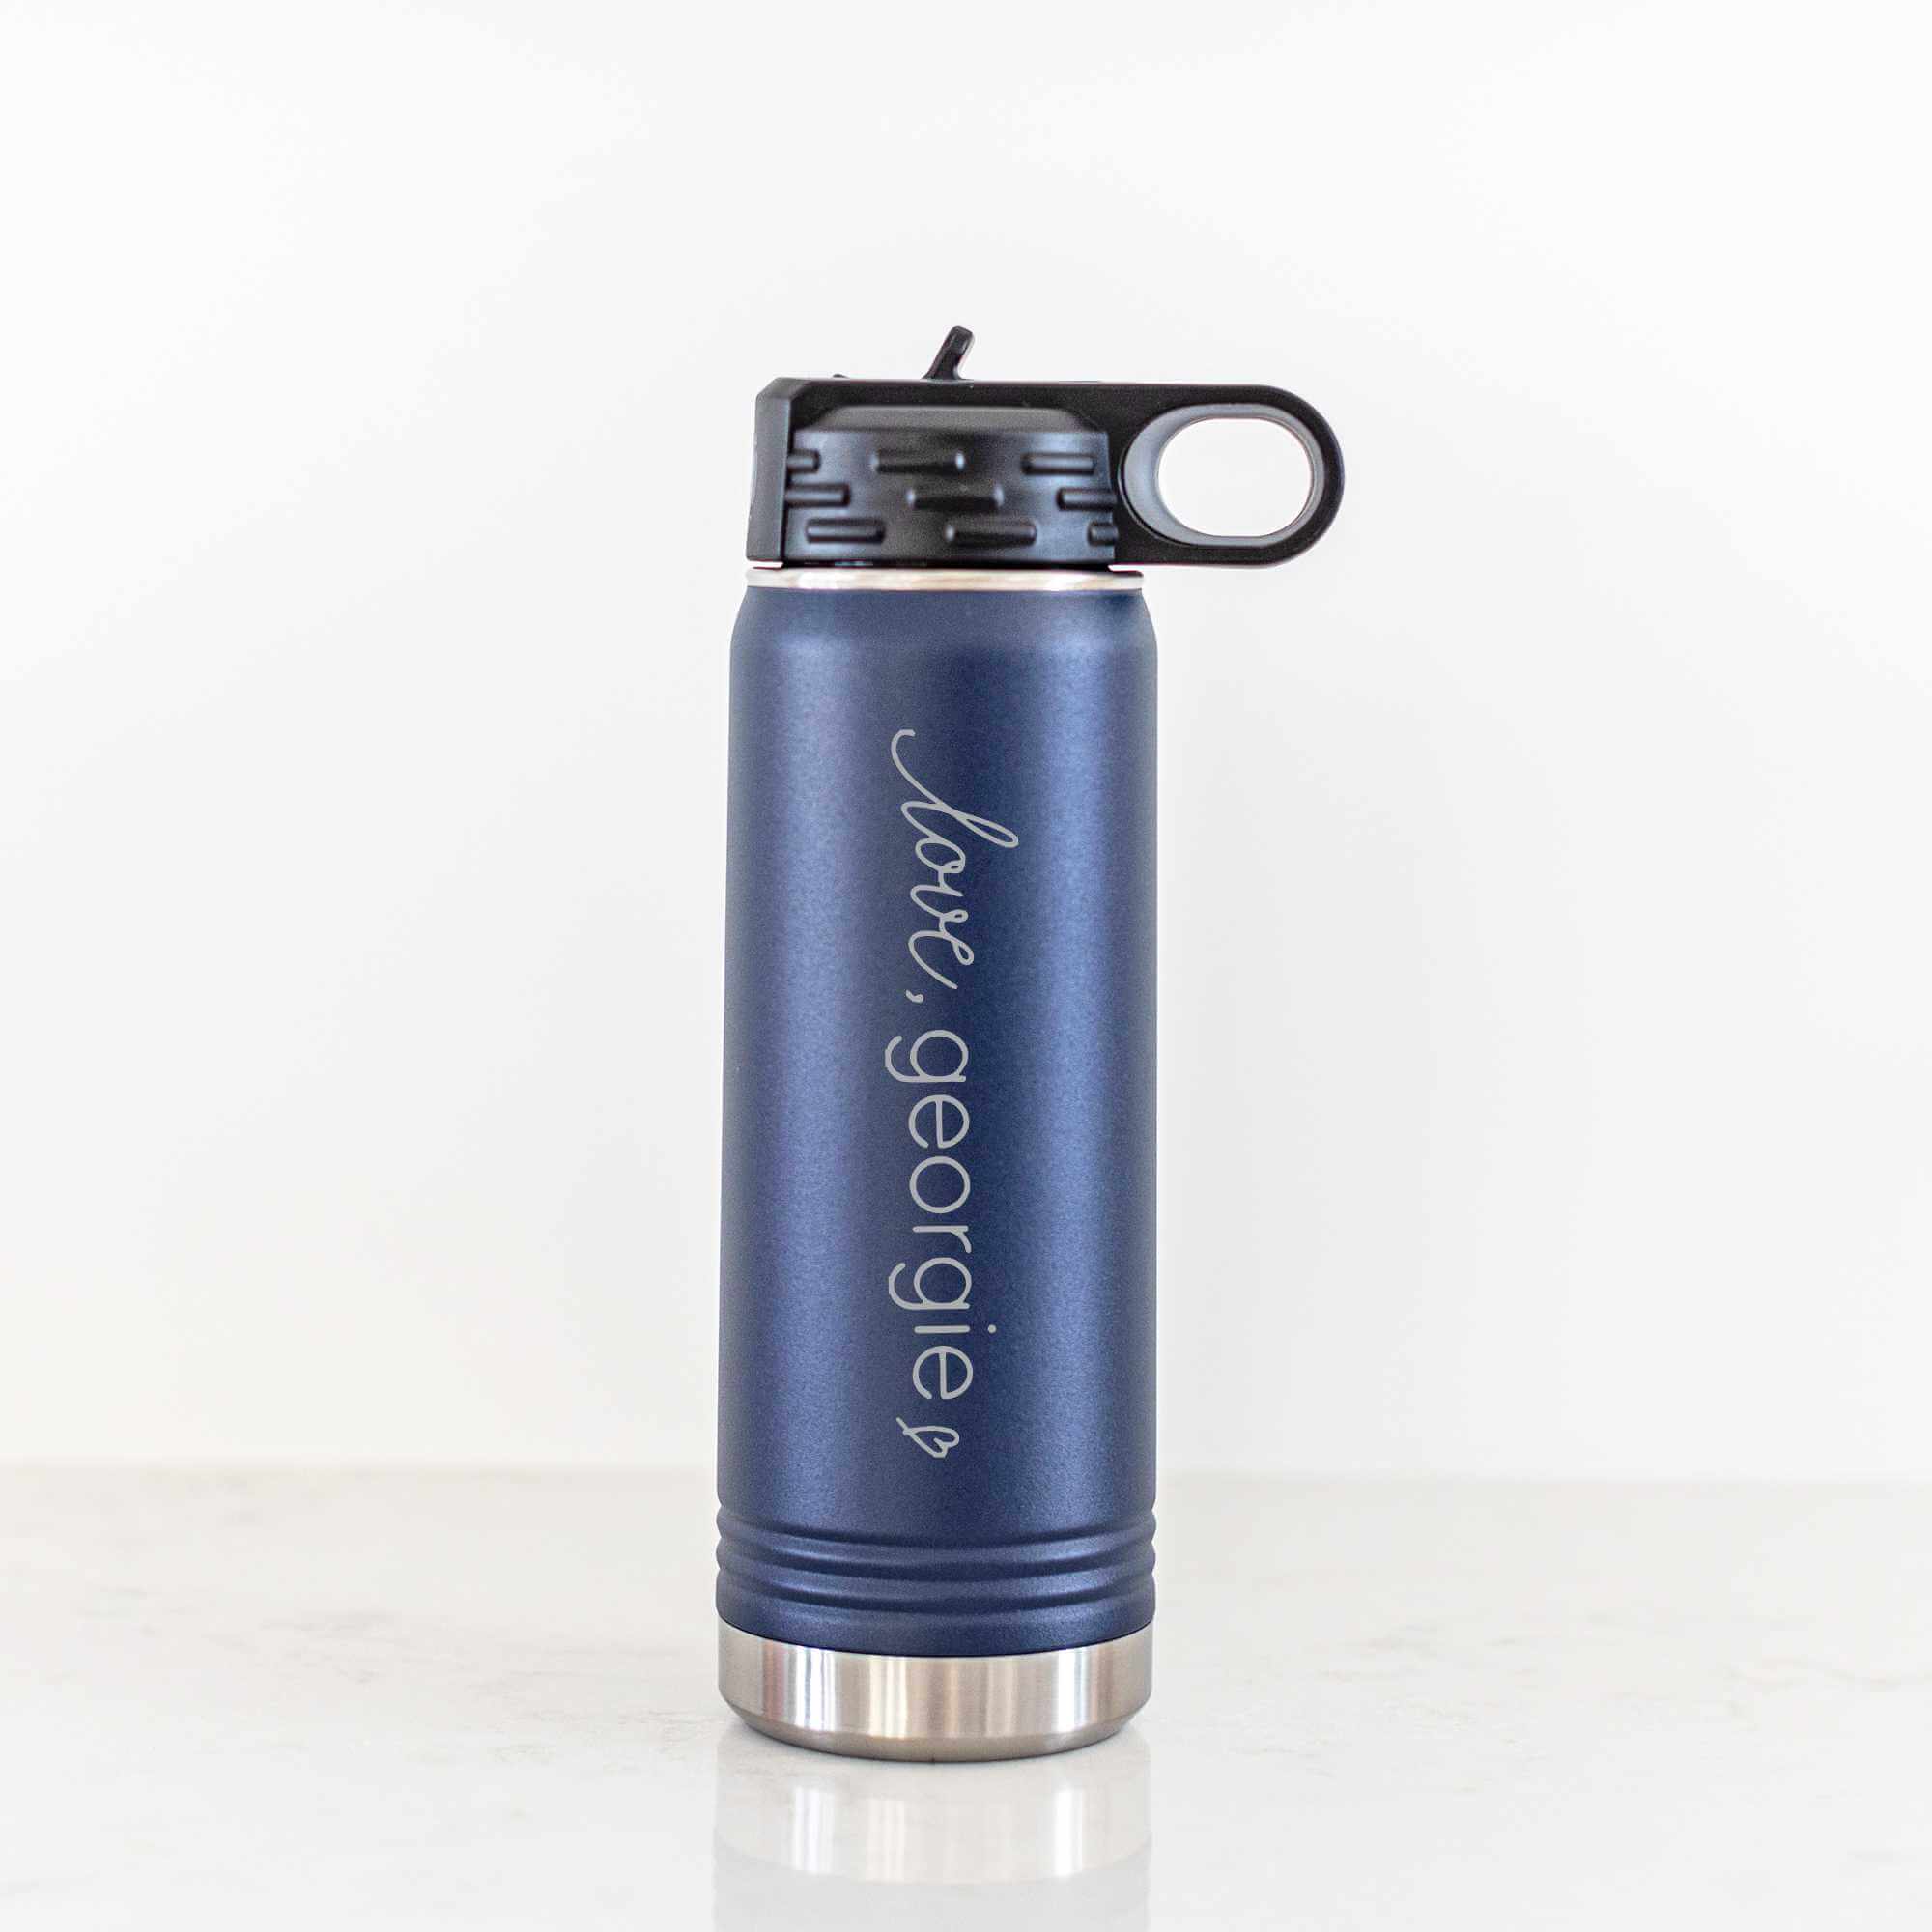 Steel Water Bottle with Business Logo - 20 oz